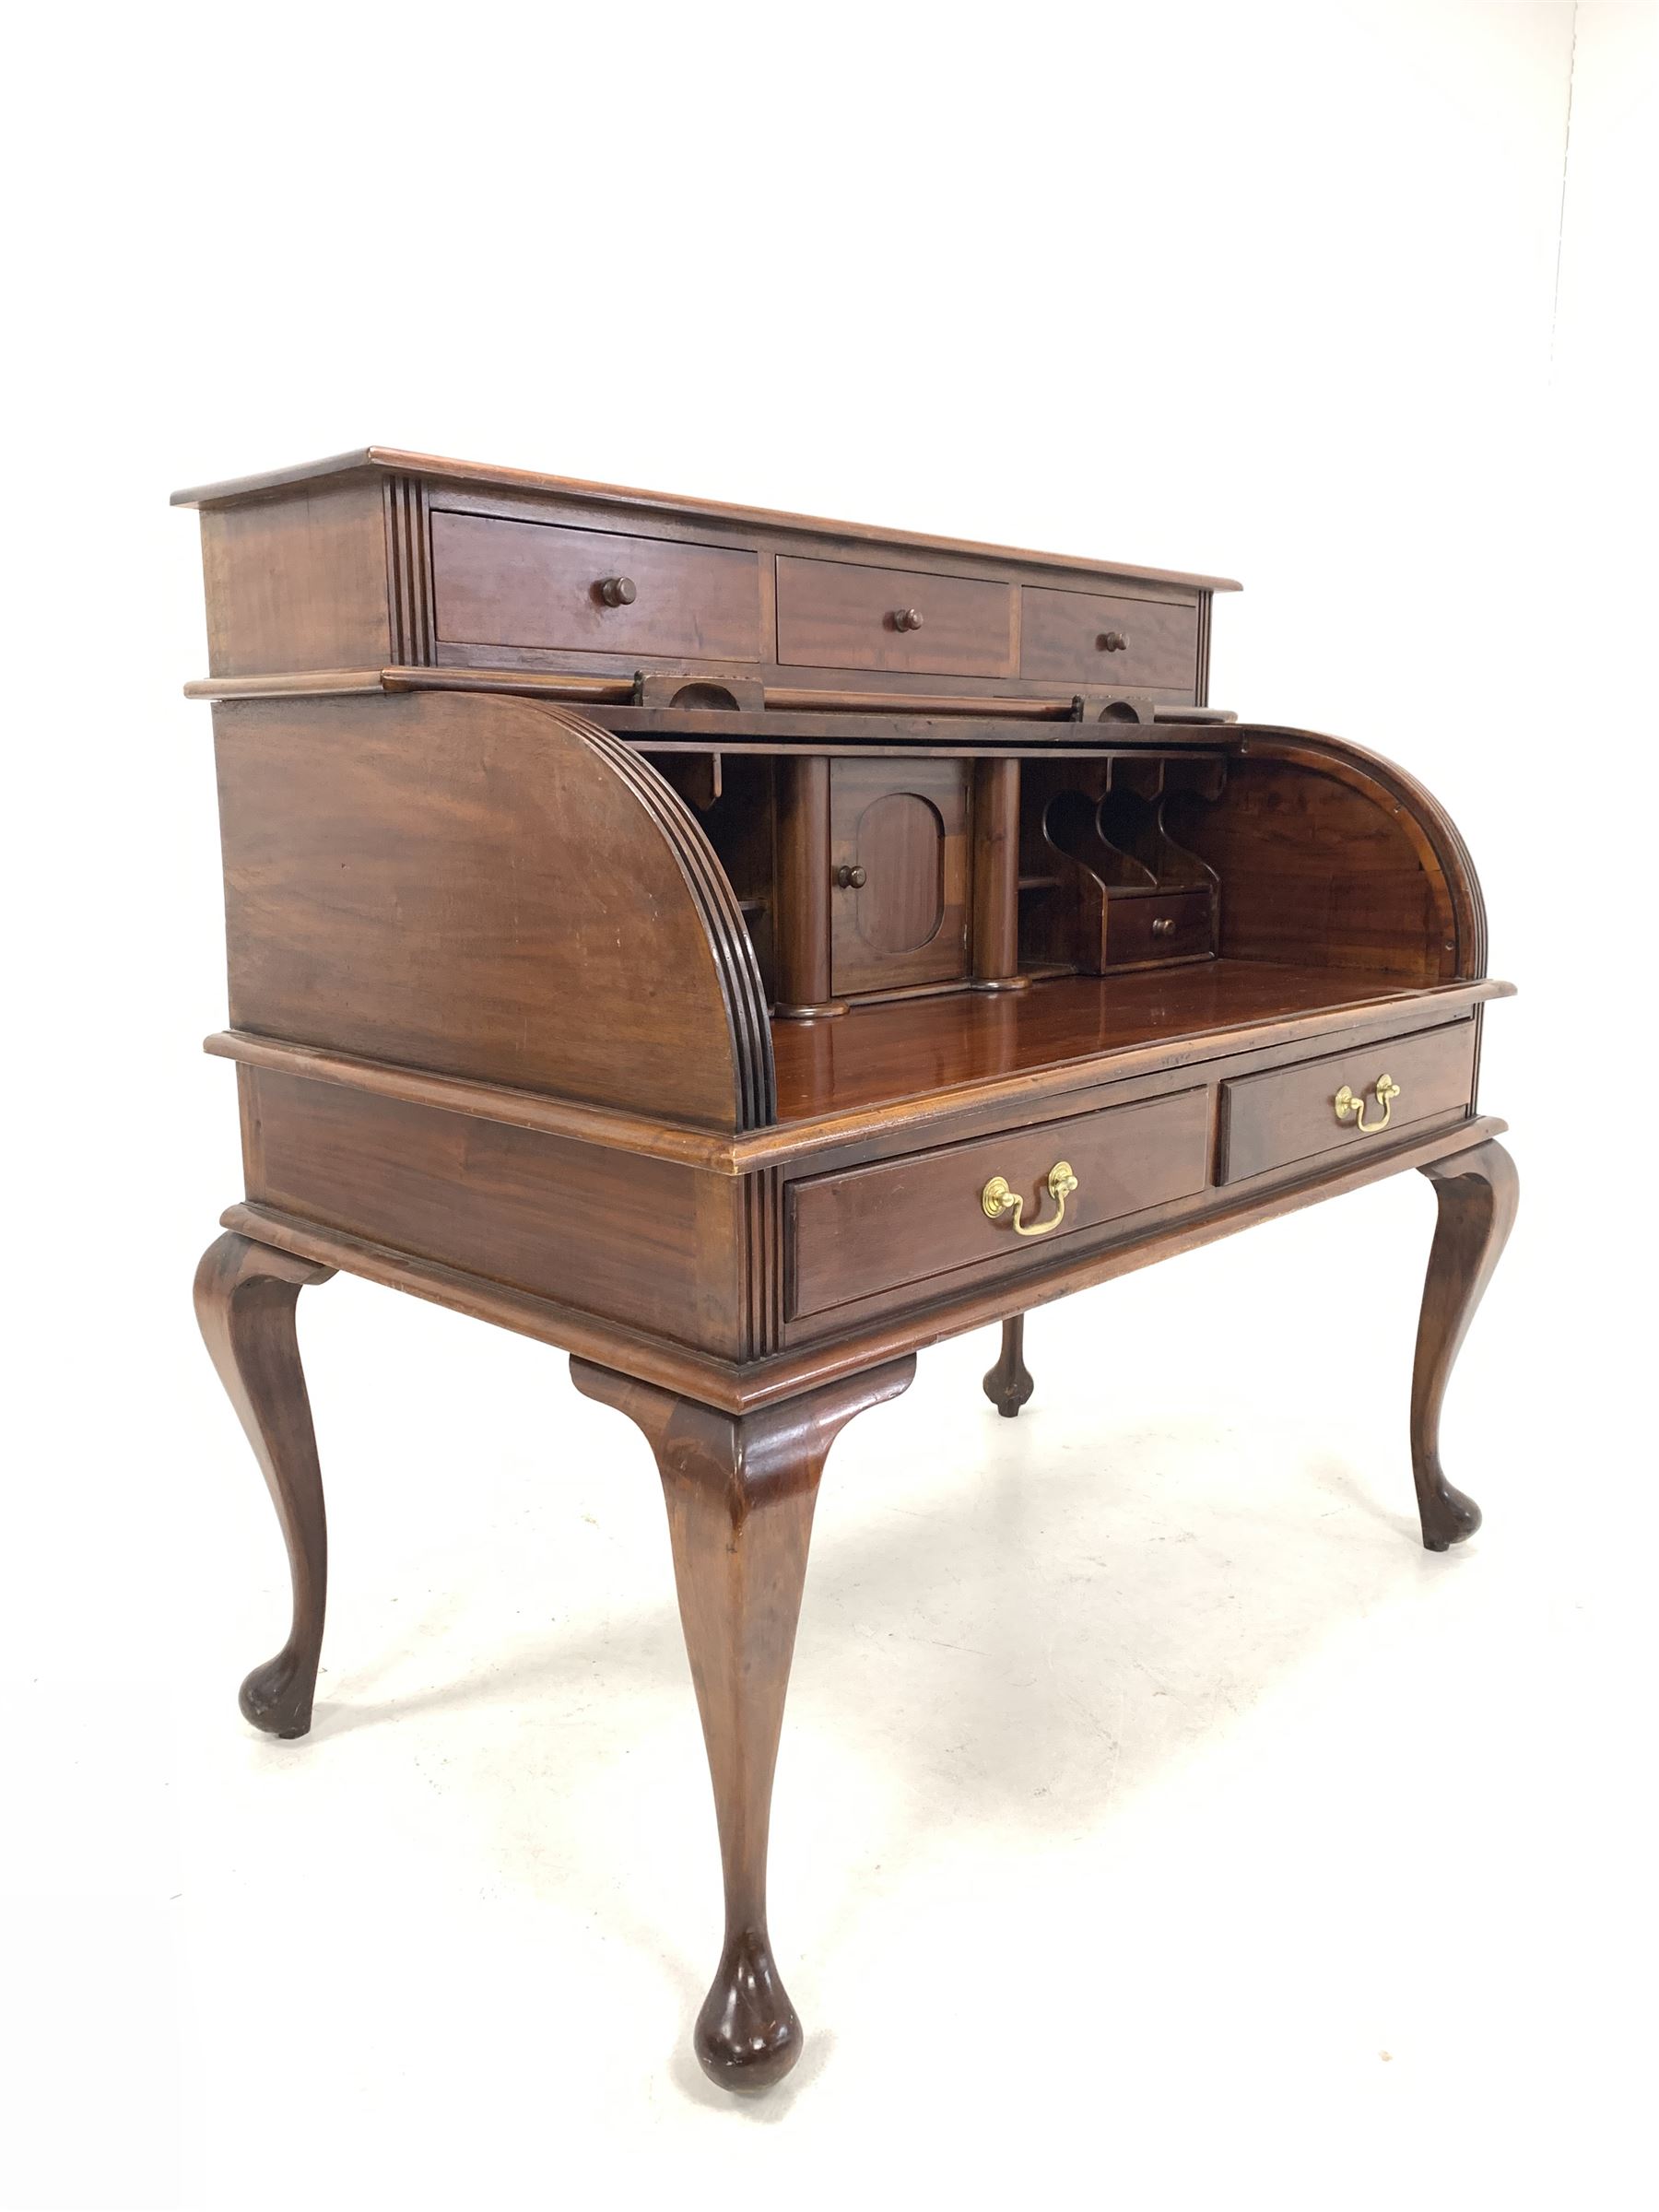 Georgian style mahogany roll top desk - Image 3 of 3